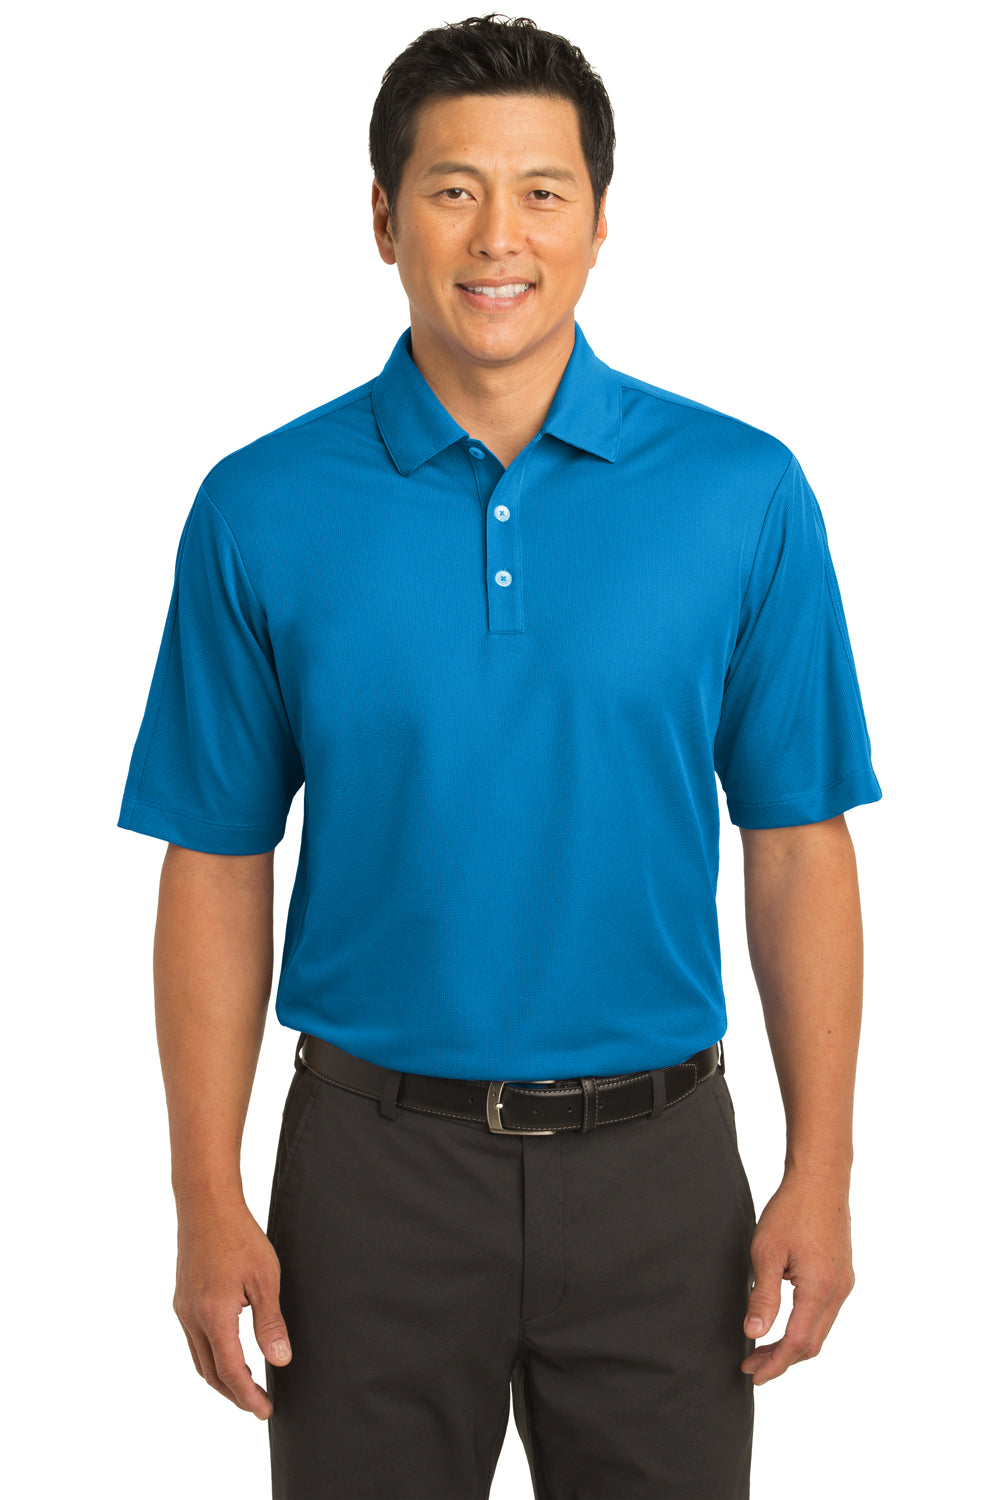 Nike 266998 Mens Tech Sport Dri-Fit Moisture Wicking Short Sleeve Polo Shirt Pacific Blue Model Front